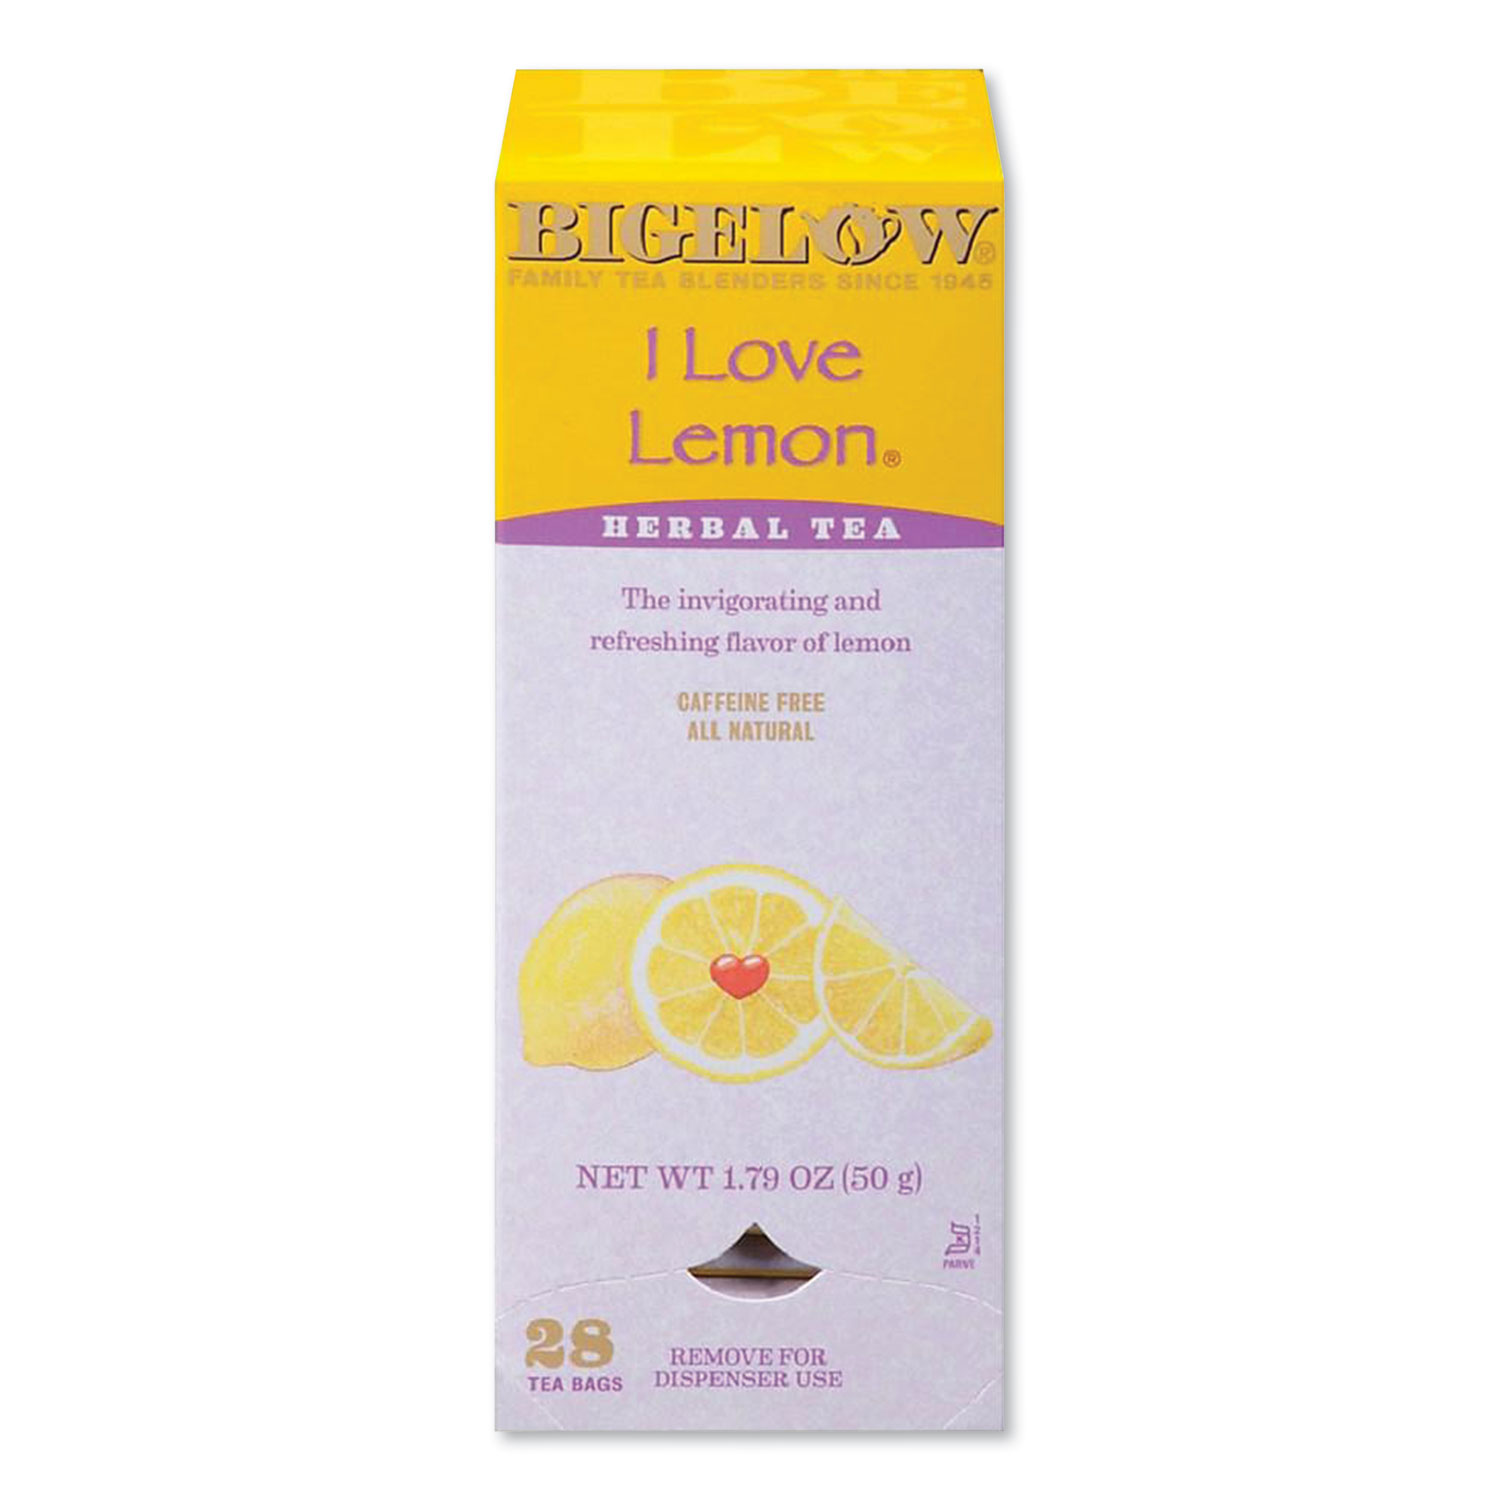  Bigelow RCB003991 I Love Lemon Herbal Tea, 0.06 oz Tea Bag, 28/Box (BTC913730) 